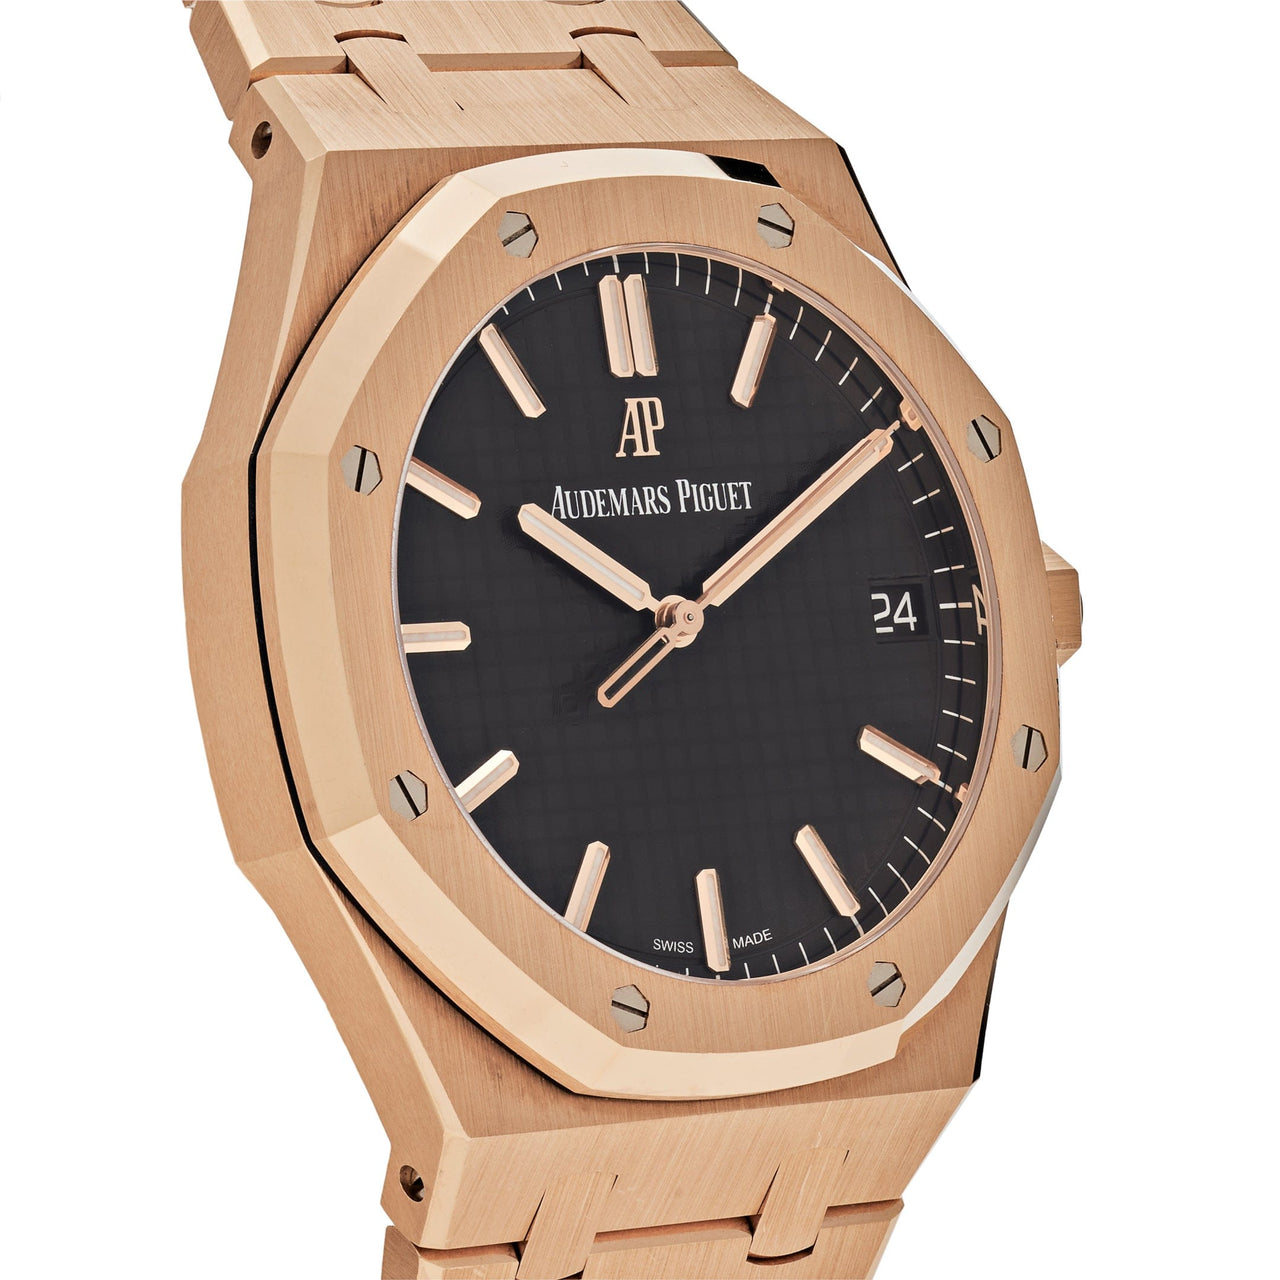 Luxury Watch Audemars Piguet Royal Oak Selfwinding Rose Gold Black Dial 41mm 15500OR.OO.1220OR.01 Wrist Aficionado